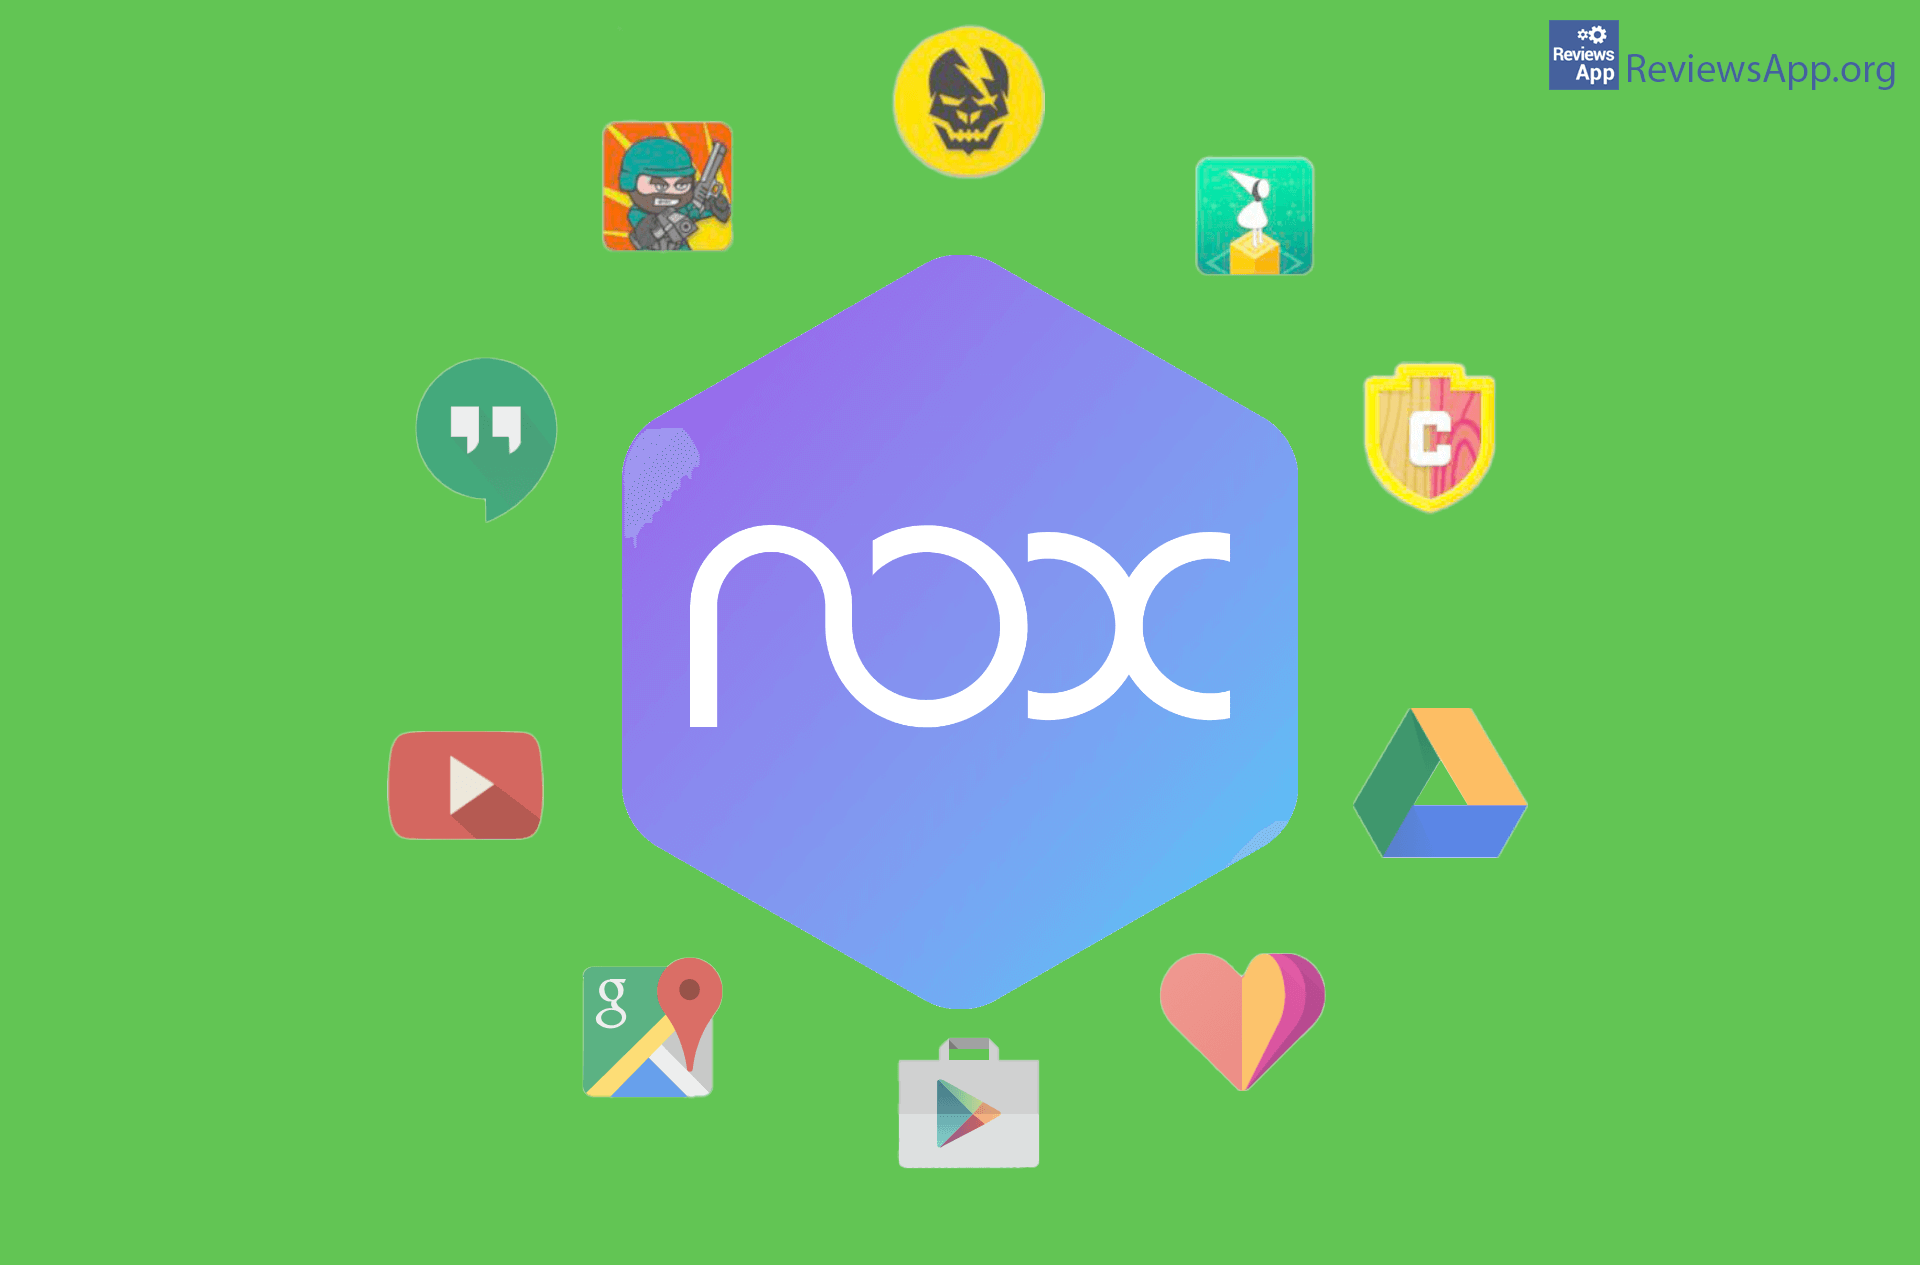 noxplayer benchmark computer